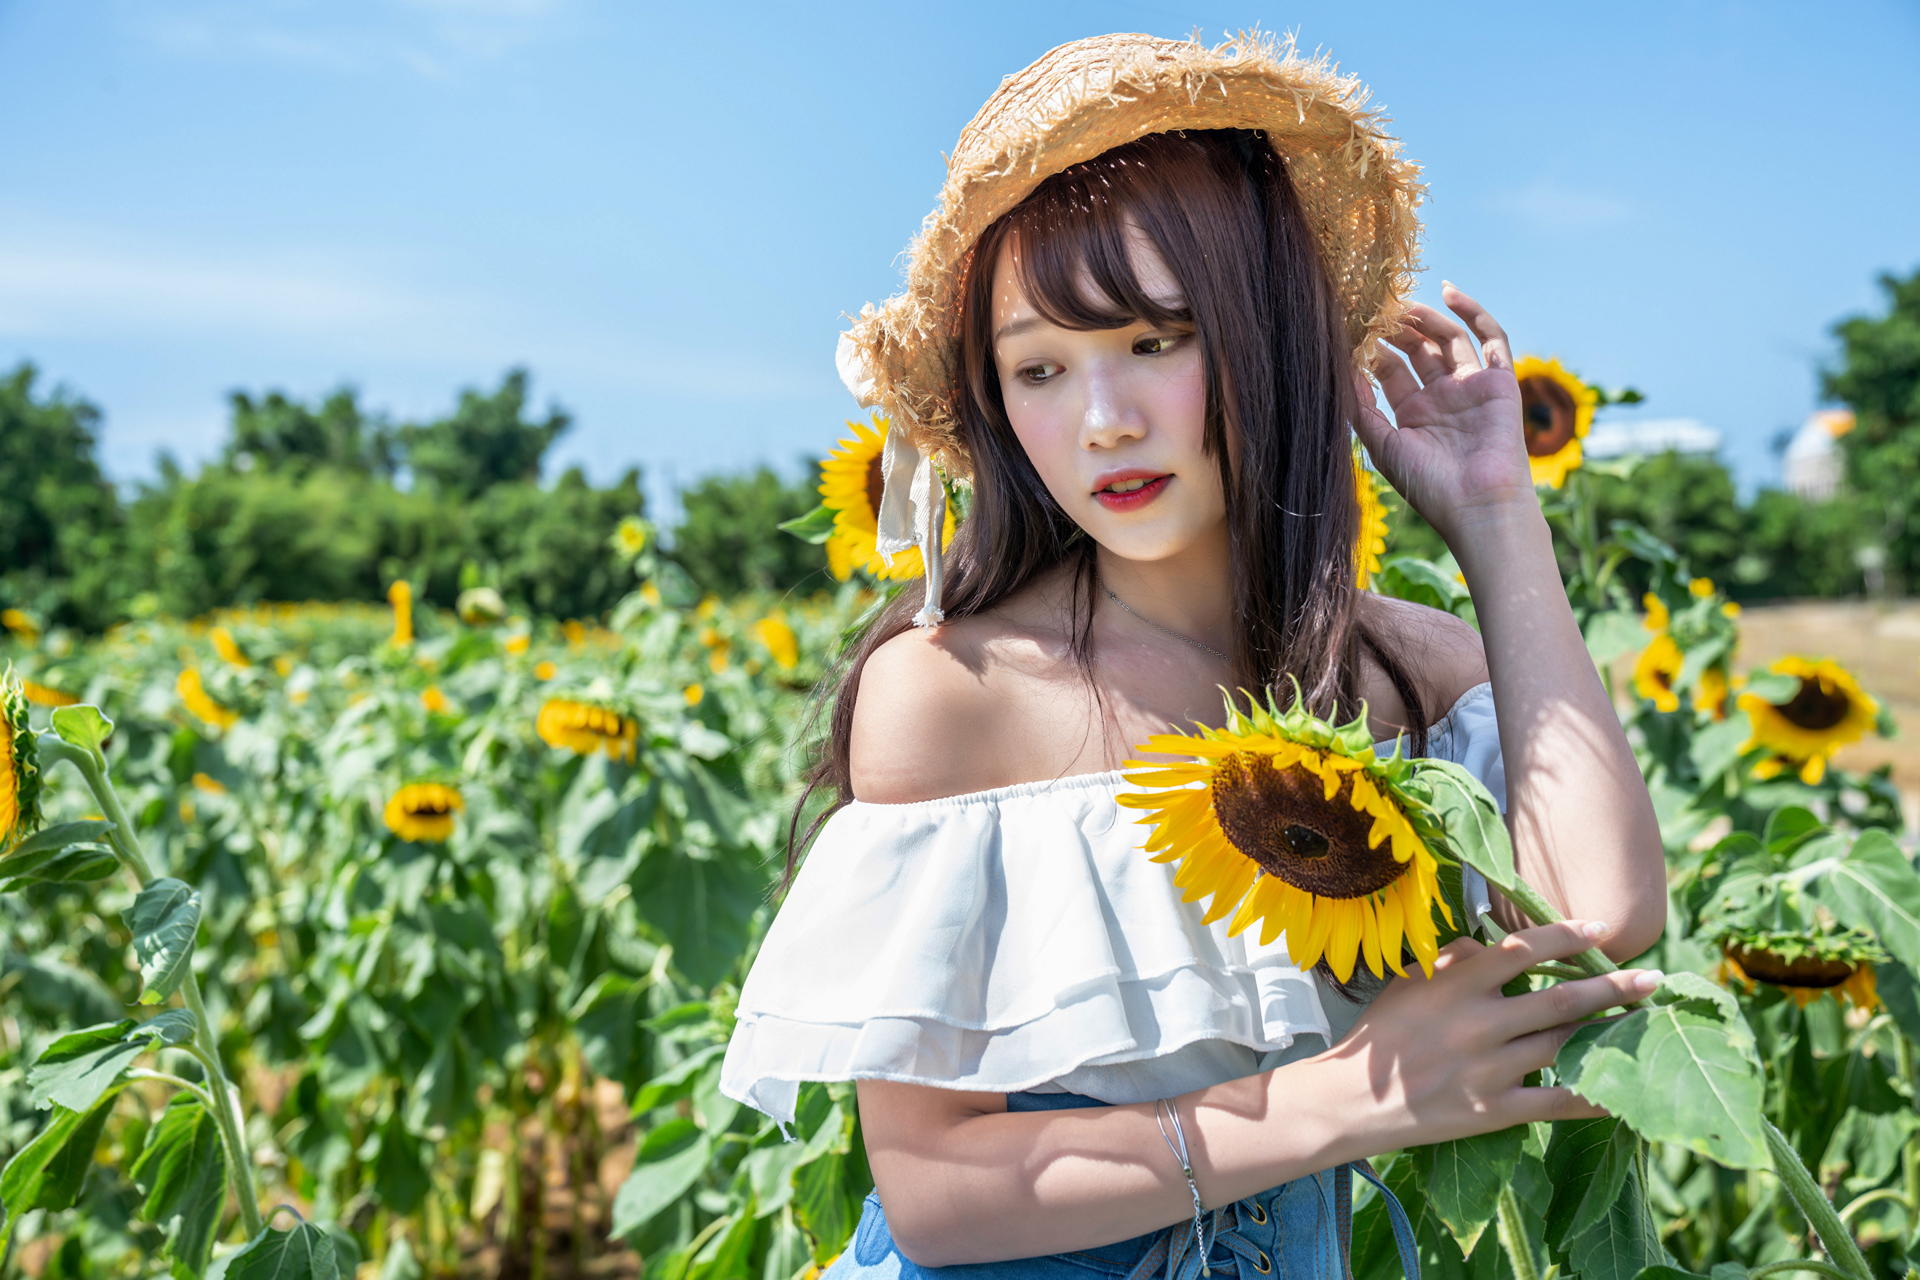 Asian Model Women Long Hair Dark Hair Field Flowers Straw Hat White Dress Sunflowers Bare Shoulders 1920x1280